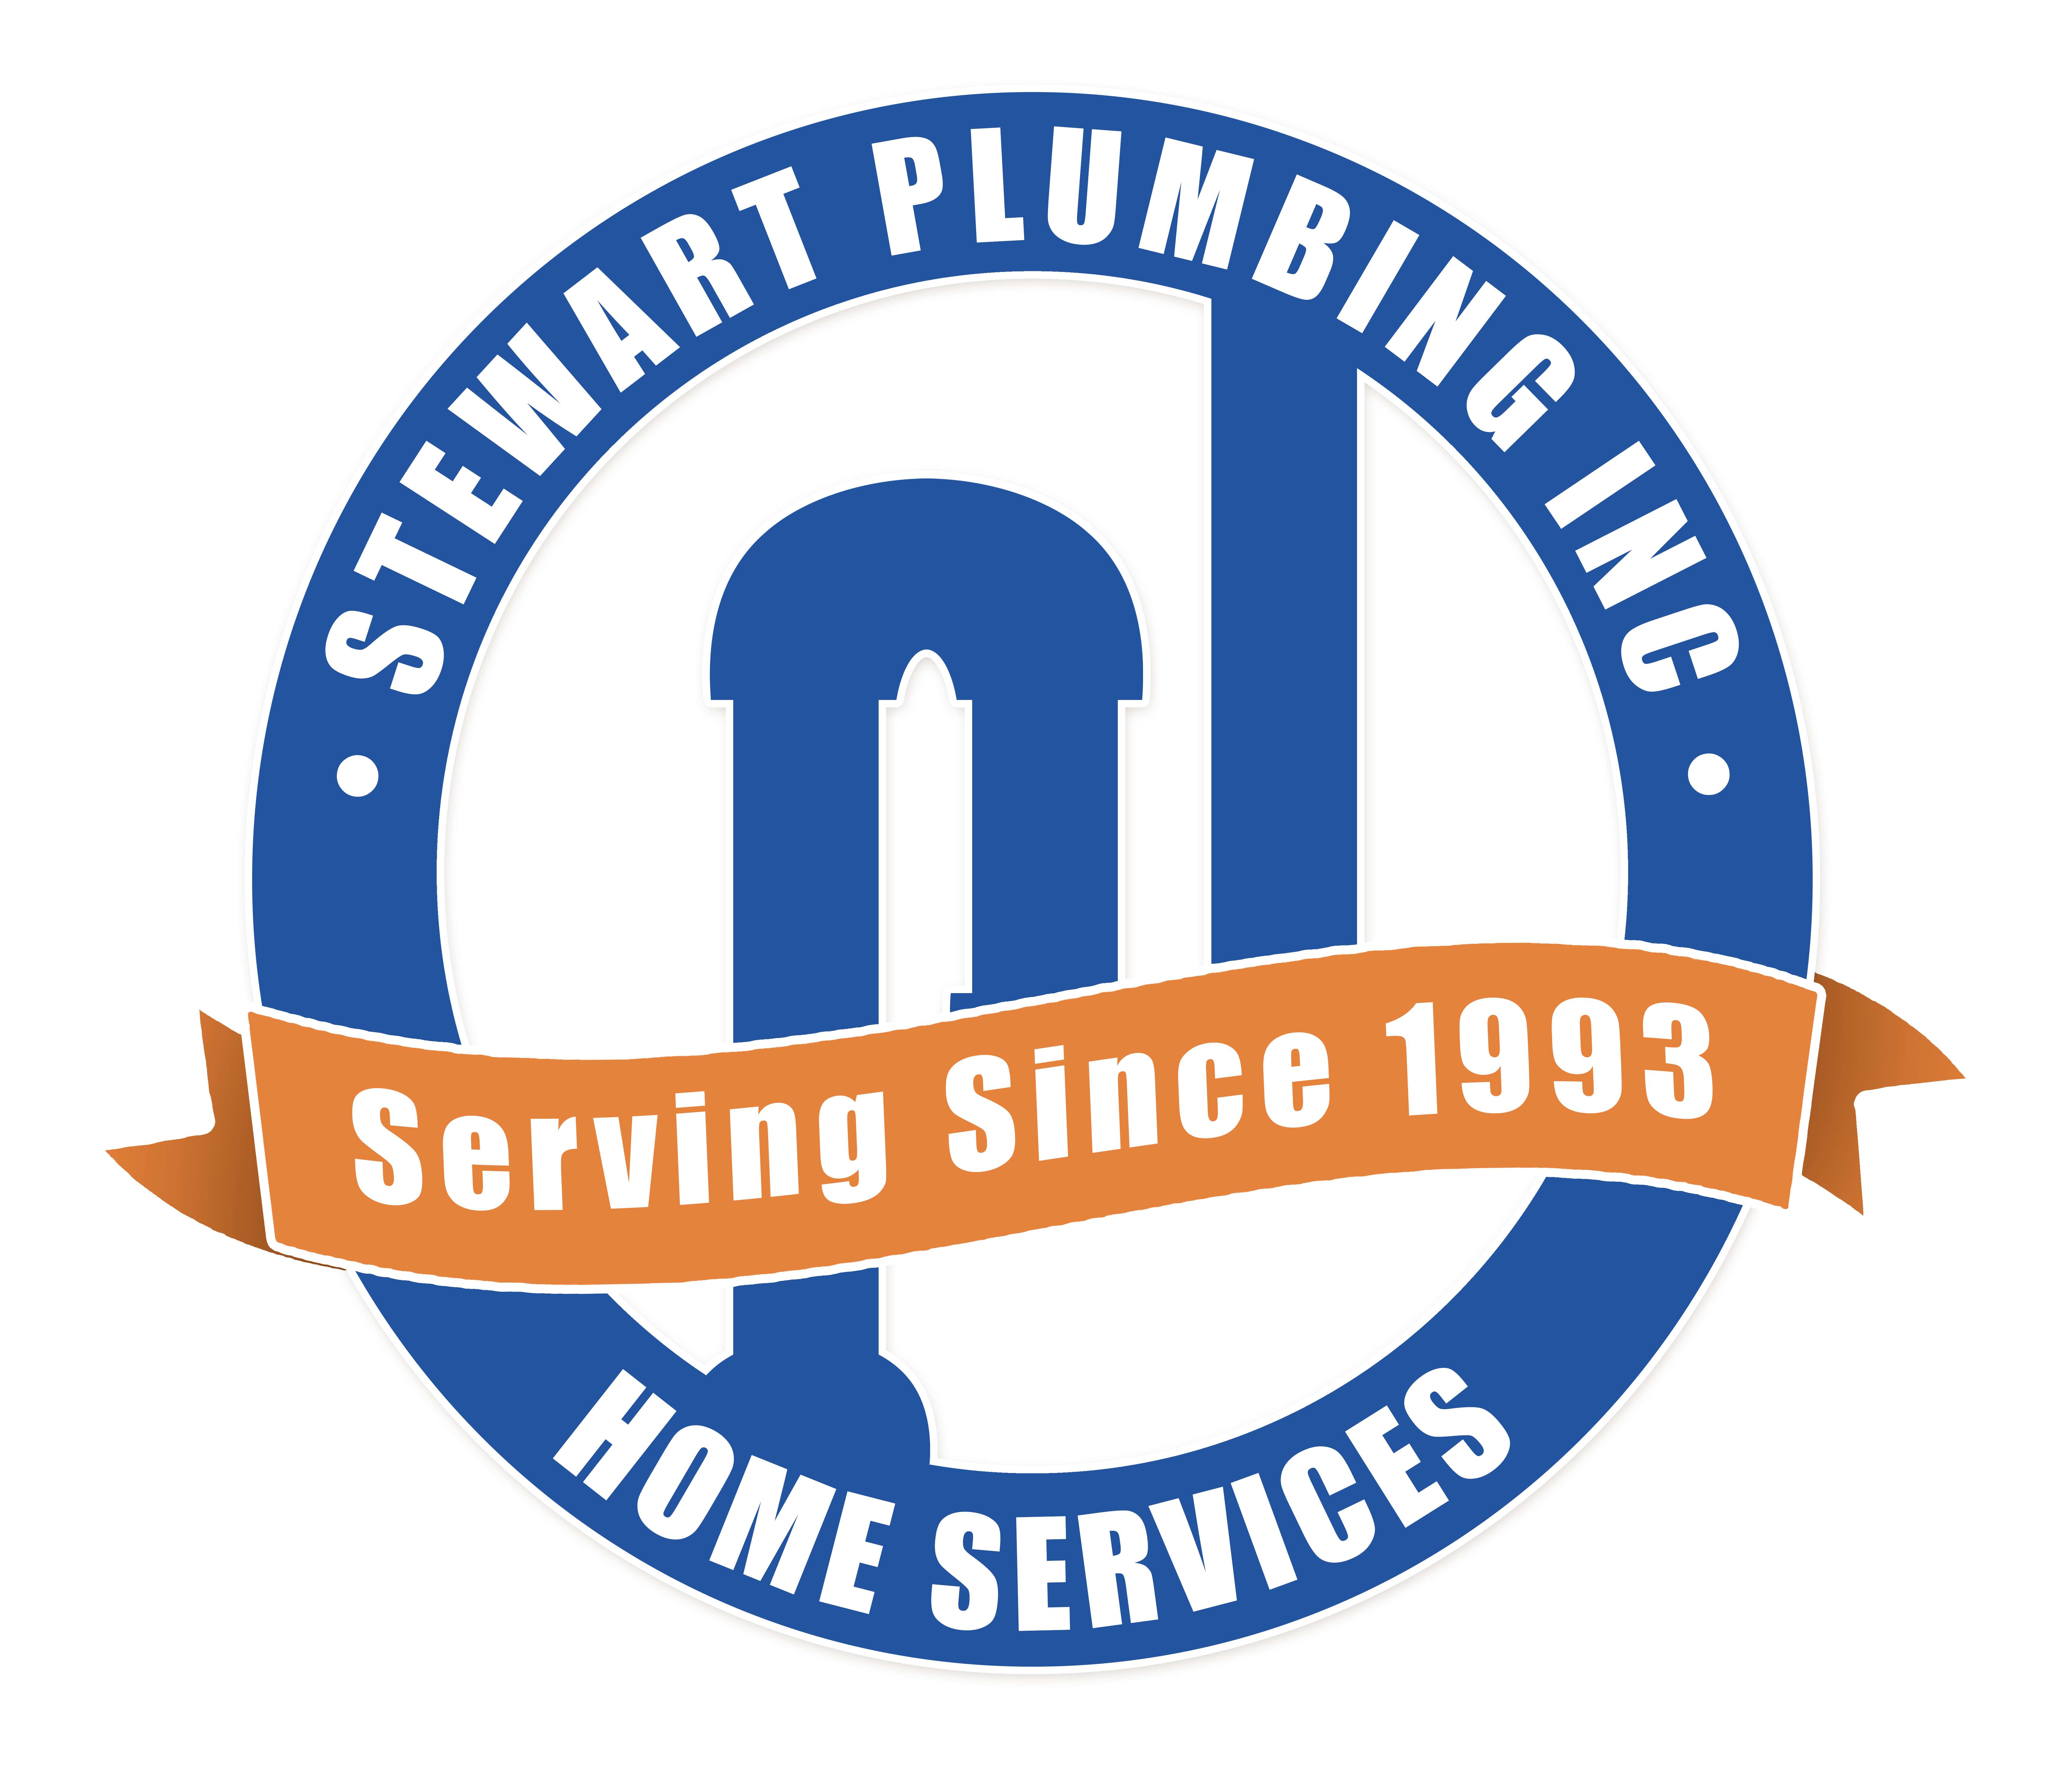 Stewart Plumbing Inc.: Embracing a New Horizon